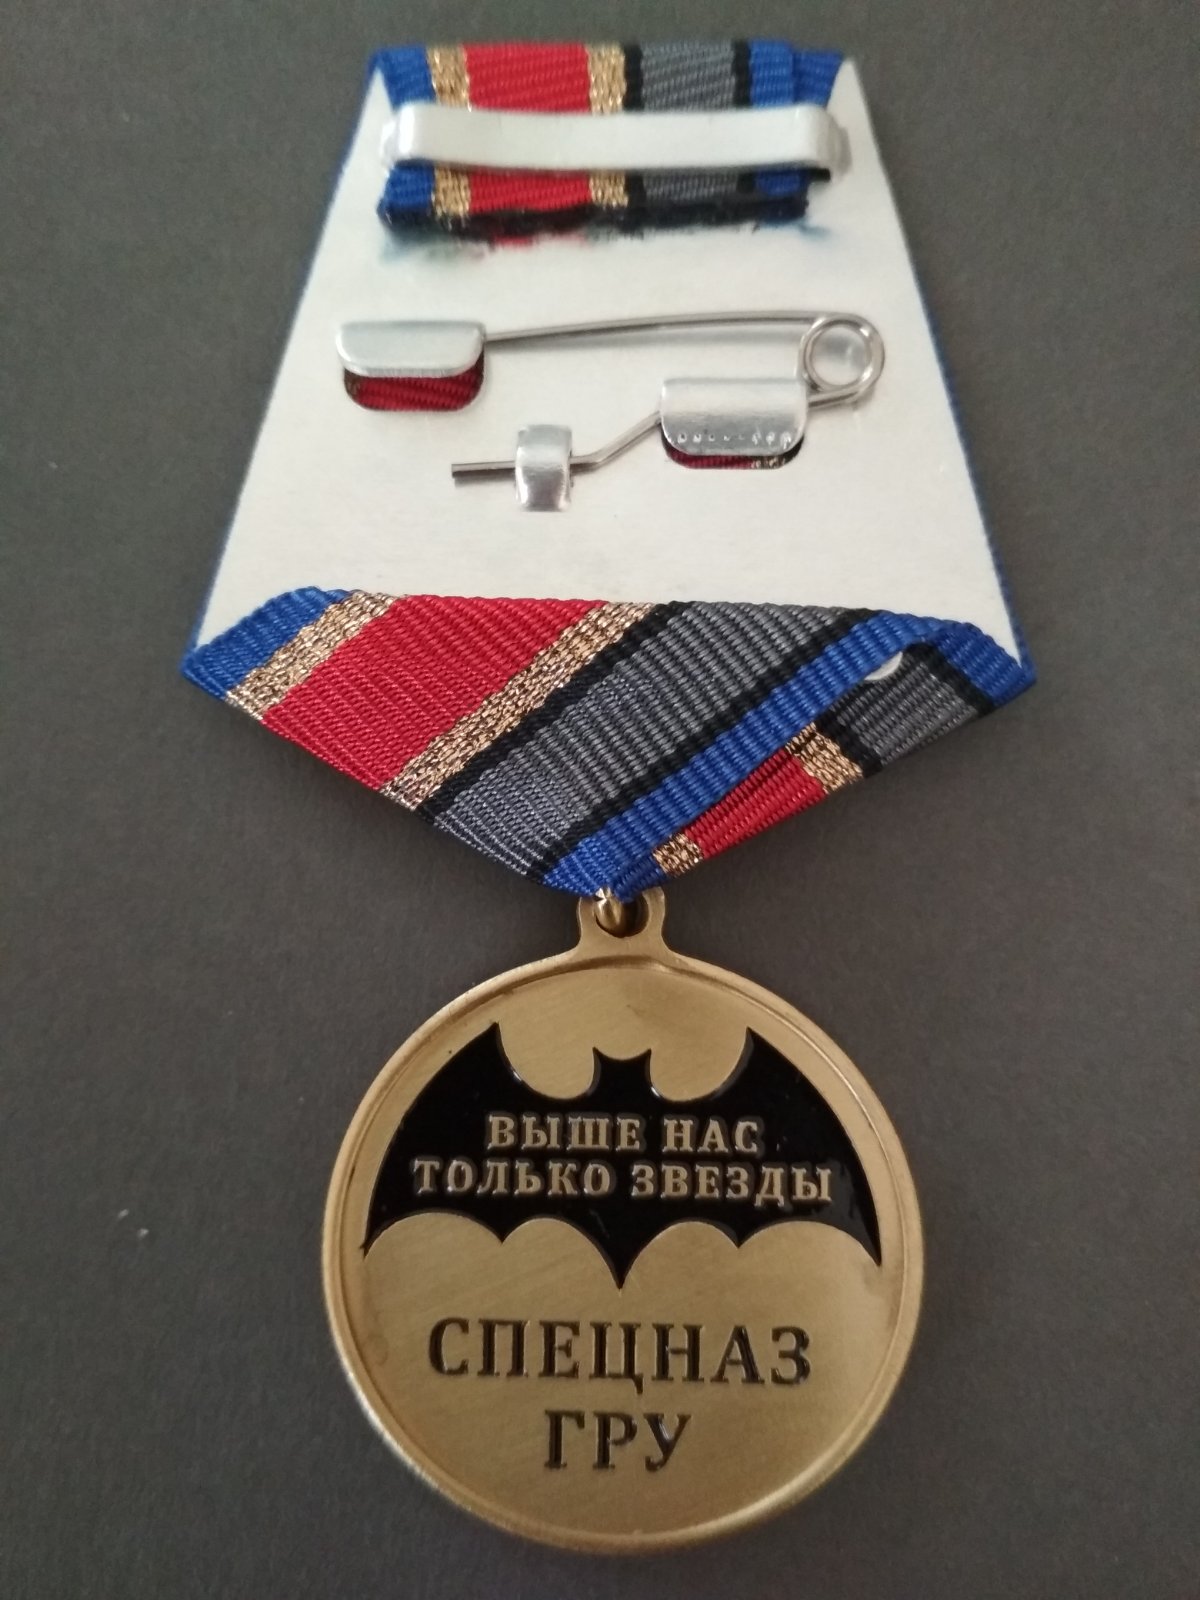 Медаль: "70 лет спецназу ГРУ". Летучая мышь, парашюты, боец.